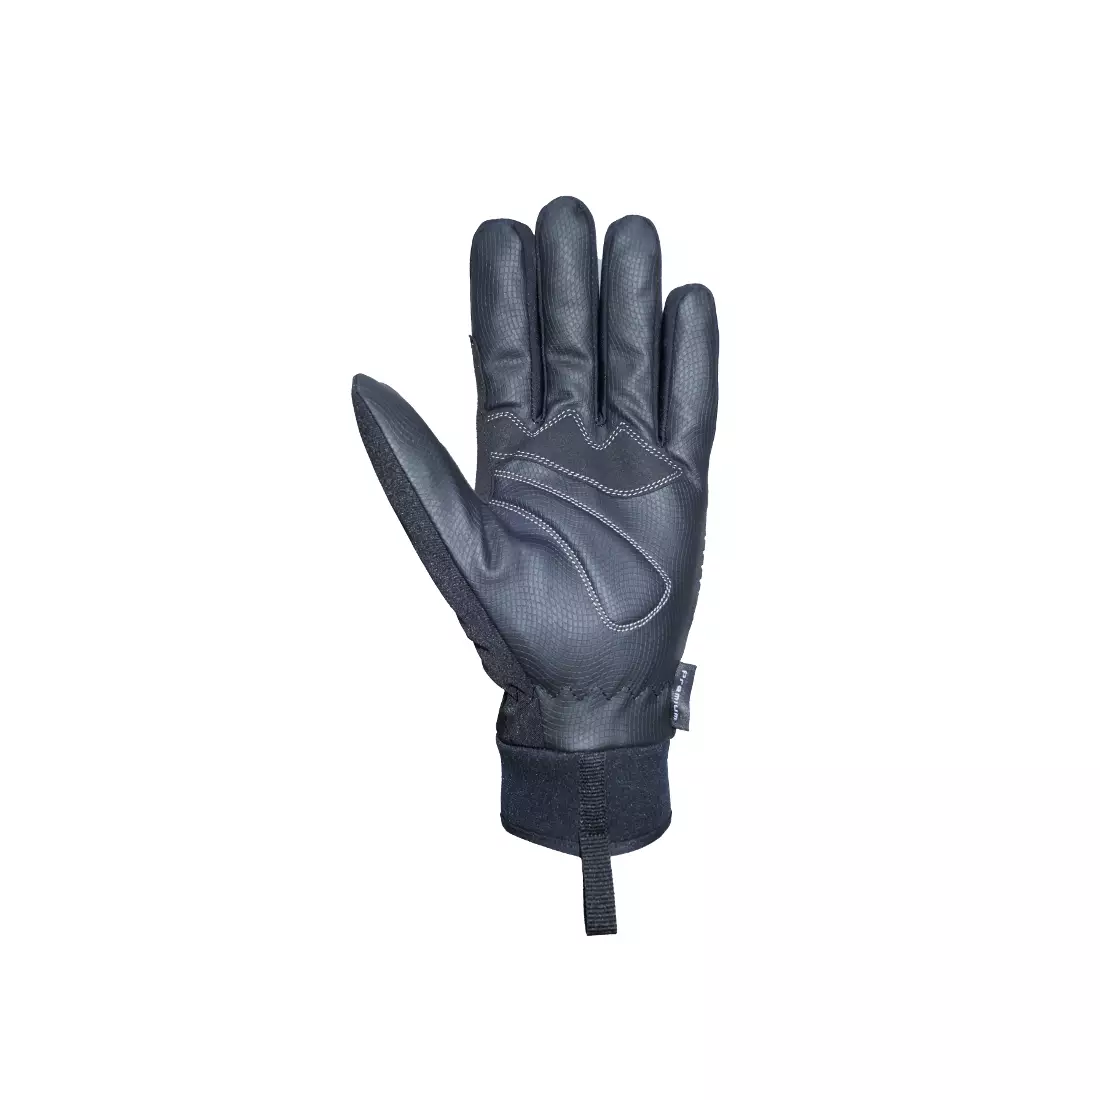 CHIBA RAIN TOUCH winter cycling gloves, black 3120018